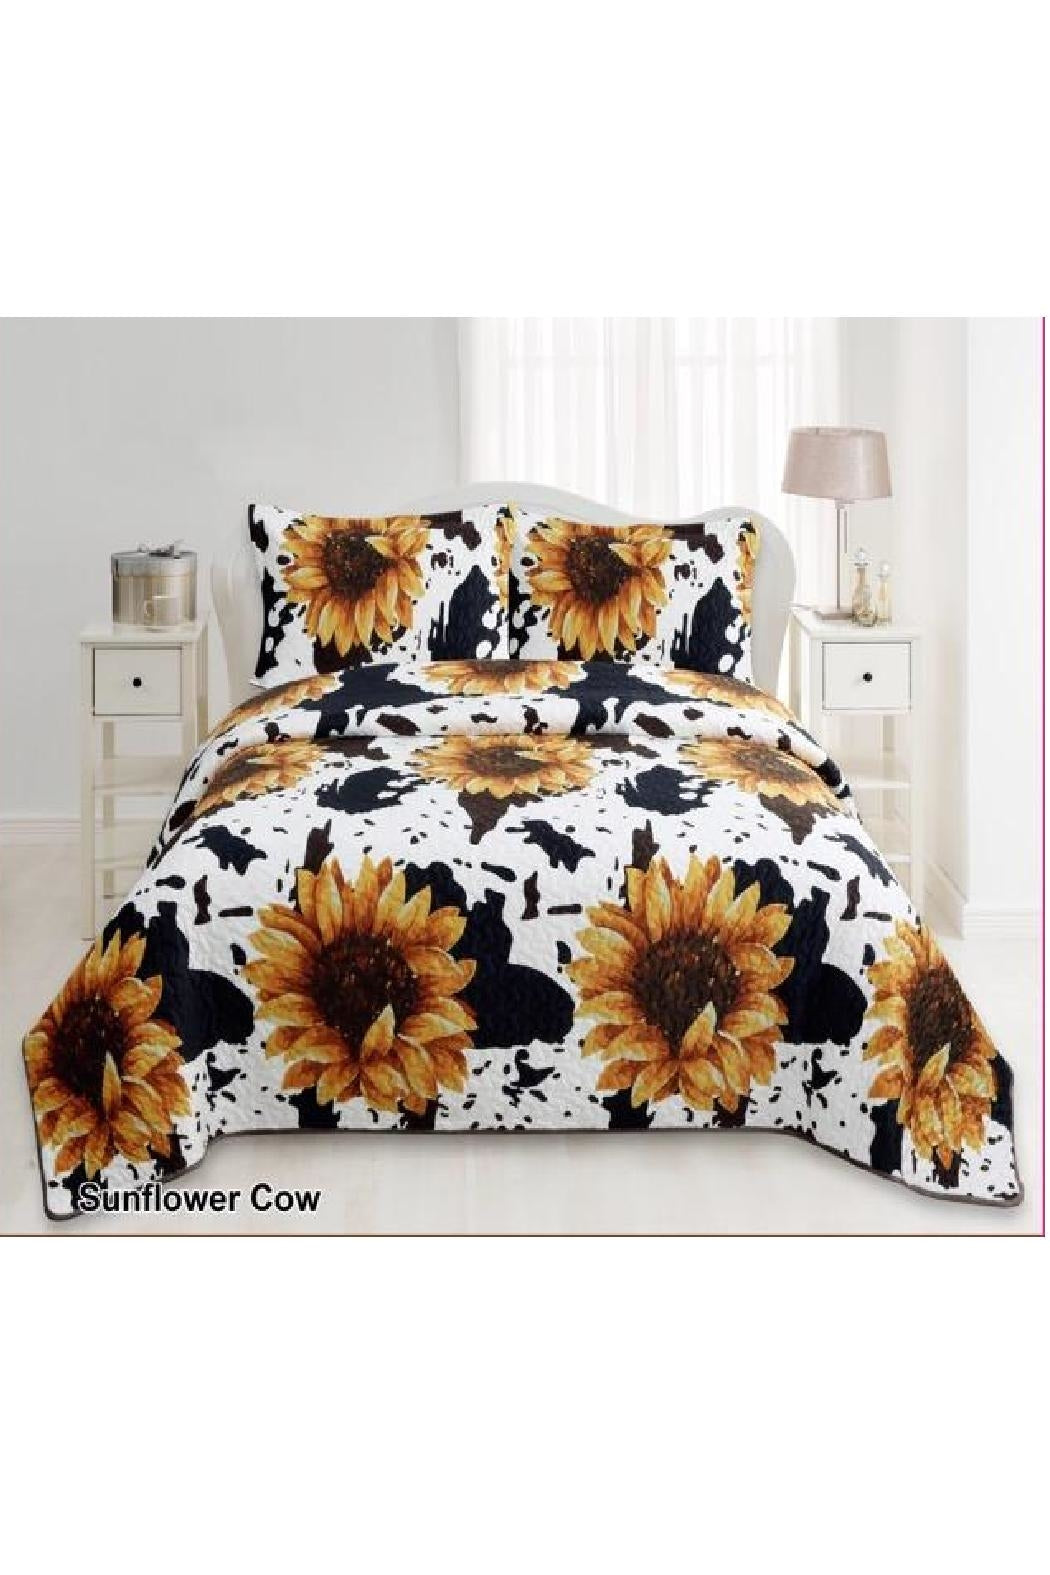 Bedding Set | Cow & Sunflowers